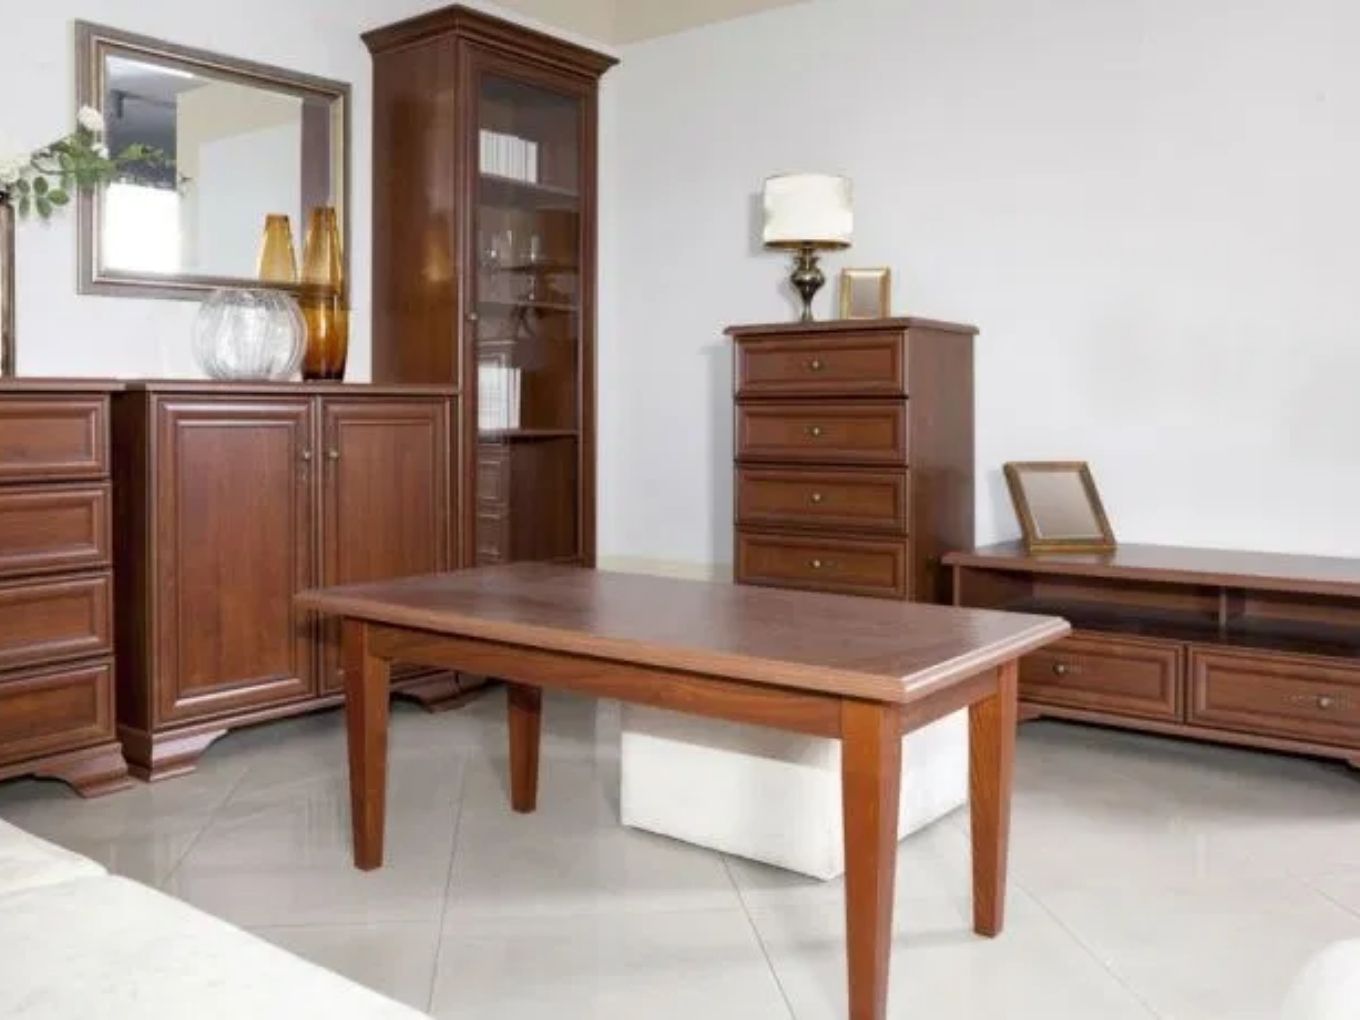 Furniture Rental Startup Furlenco Raises INR 9 Cr